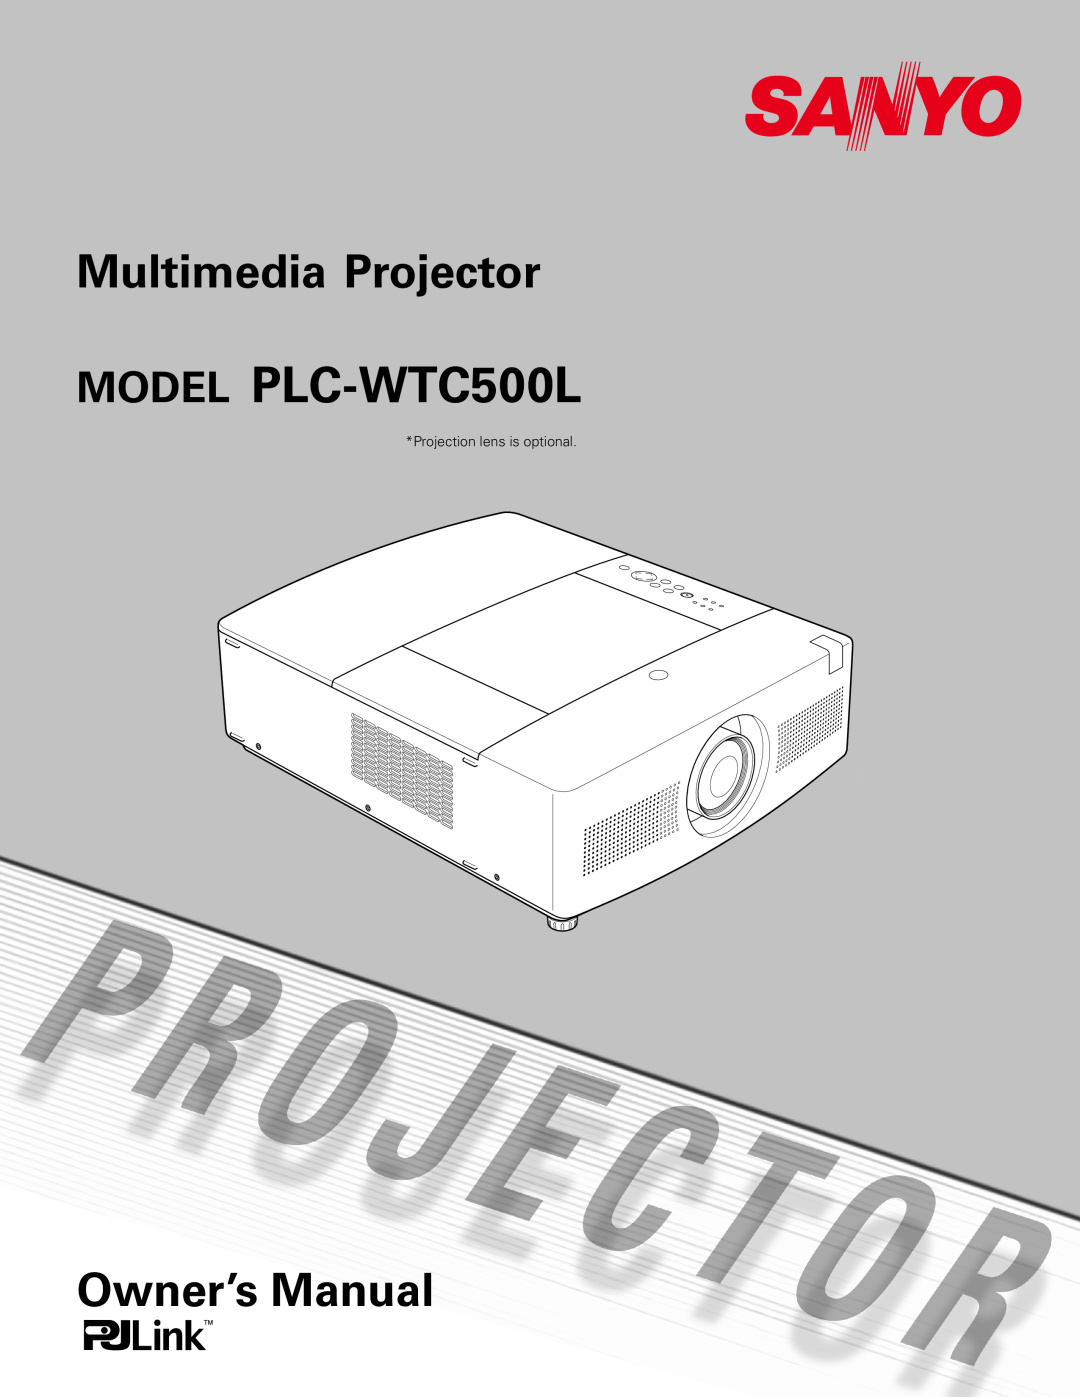 Sanyo owner manual MODEL PLC-WTC500L, Multimedia Projector, Owner’s Manual 